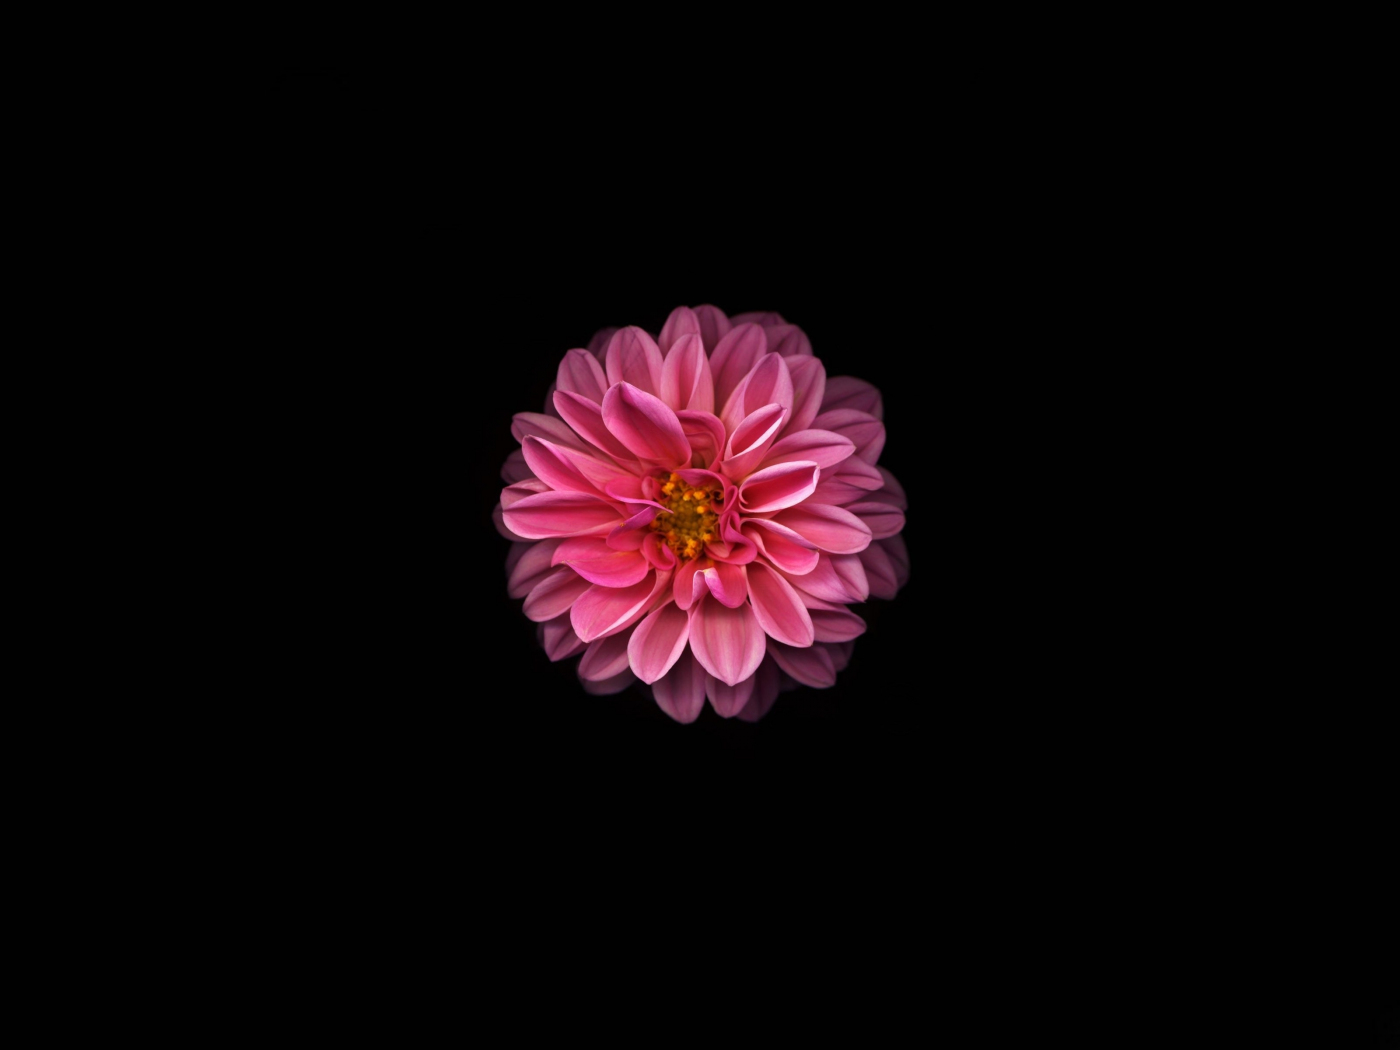 Download wallpaper 1400x1050 pink dahlia, minimal and dark, standard 4: ...